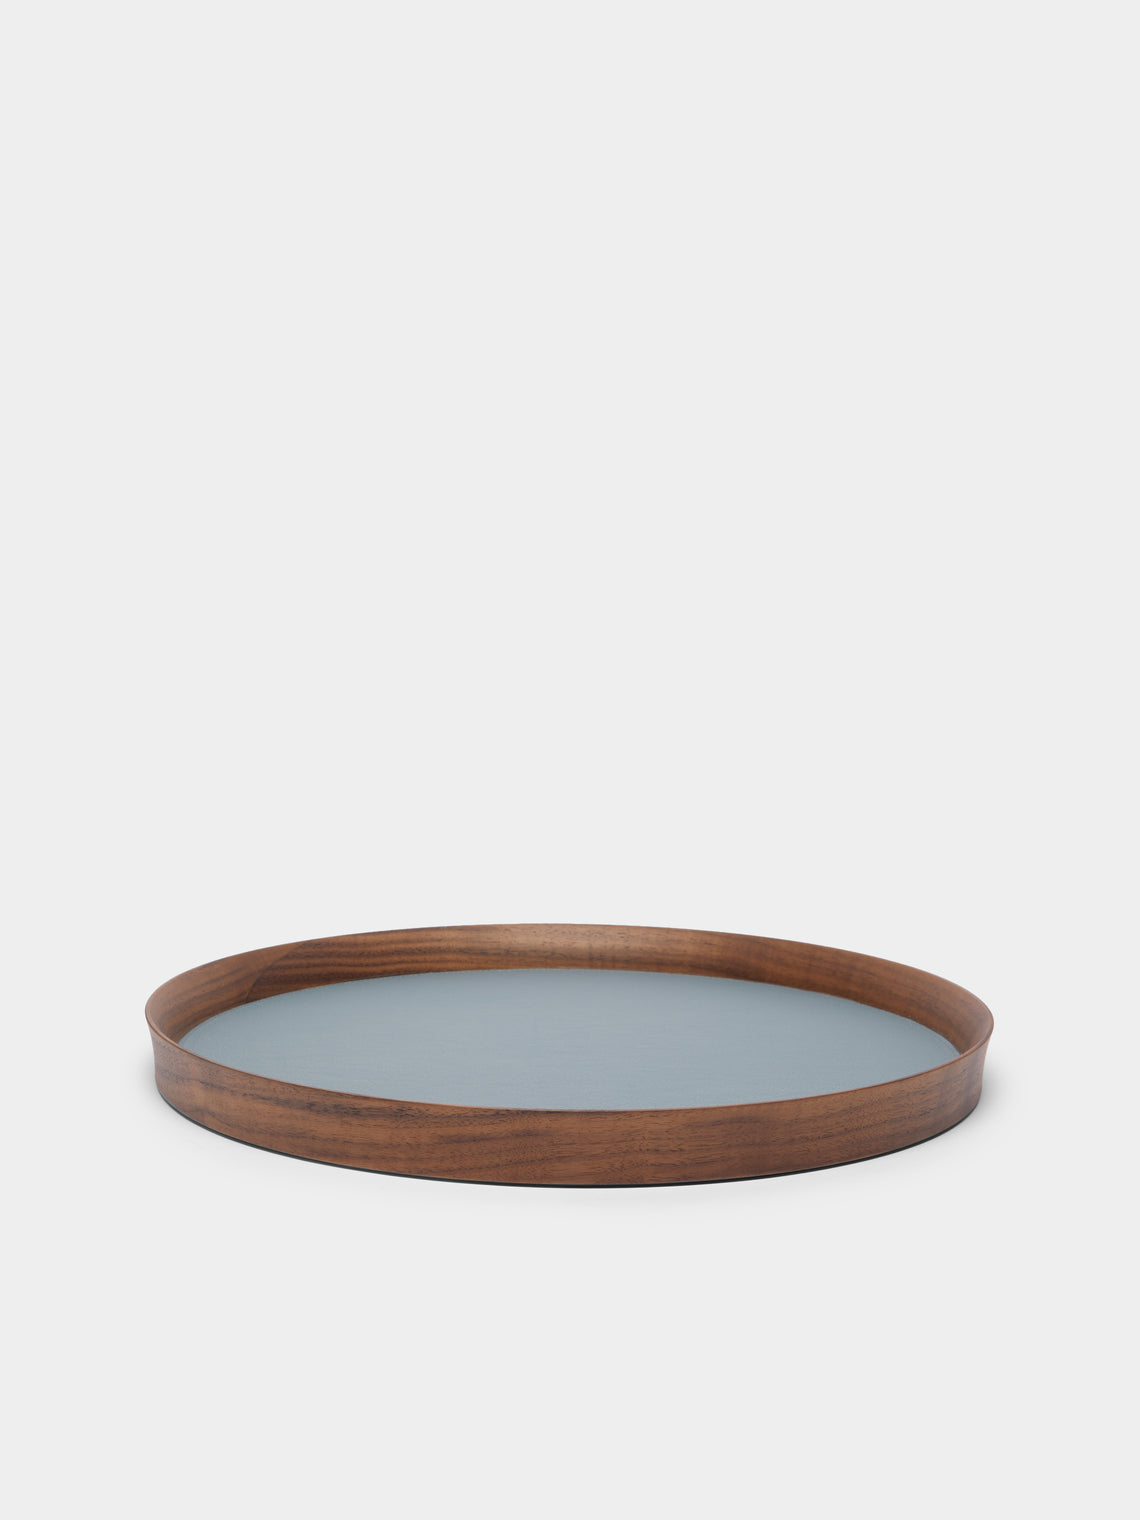 Giobagnara x Poltrona Frau - Walnut Medium Round Tray with Leather Inlay -  - ABASK